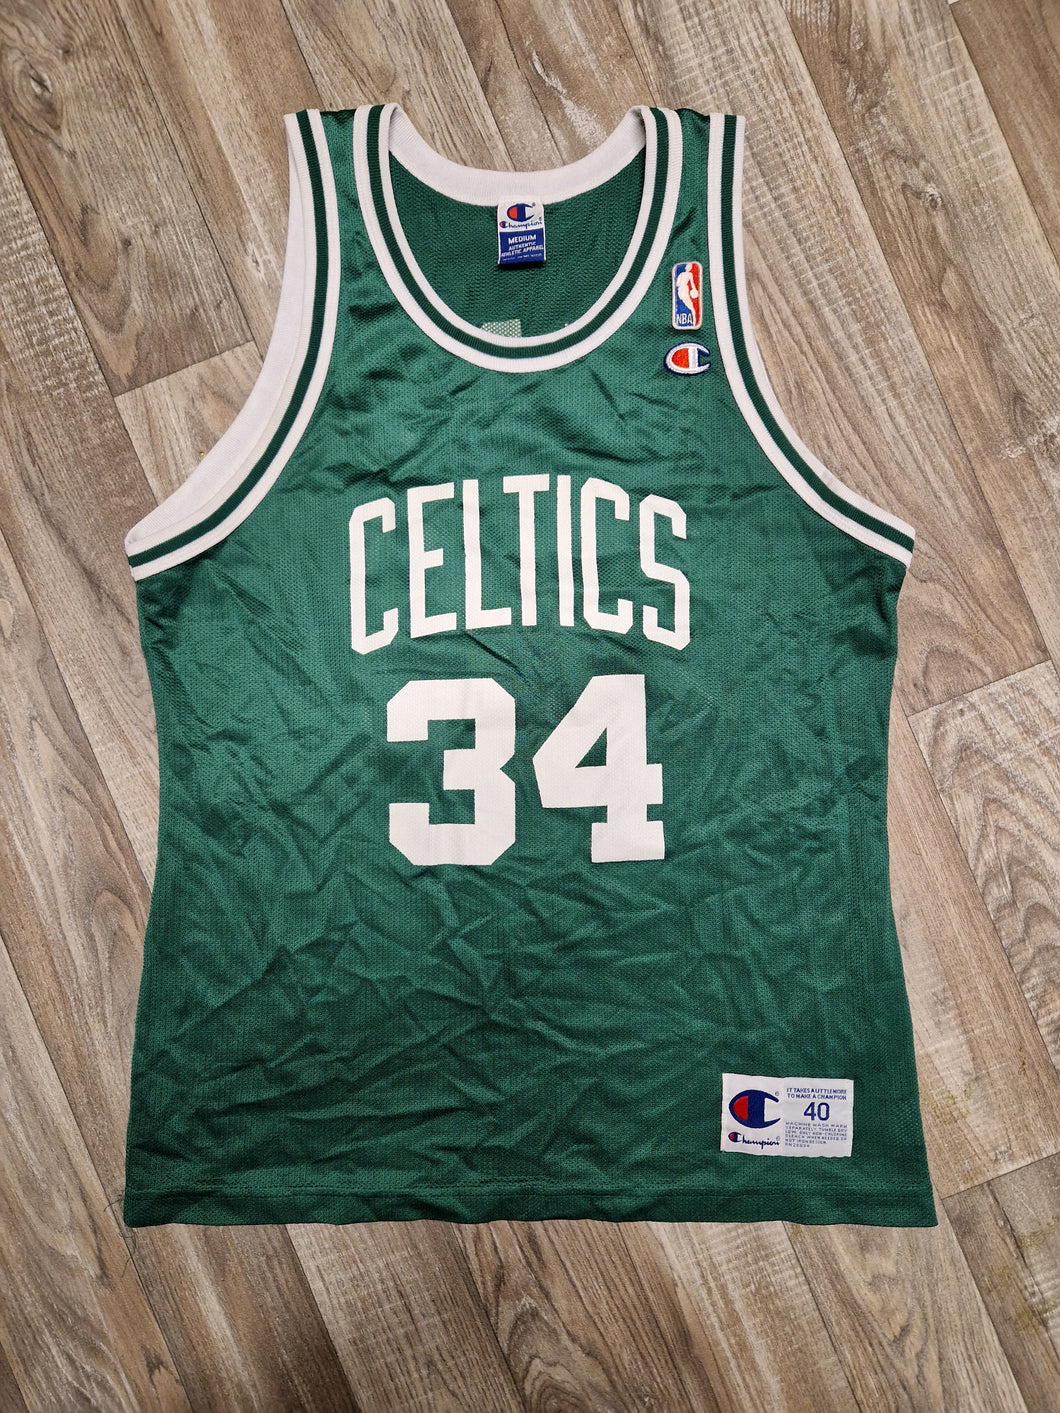 Paul Pierce Boston Celtics Jersey Size Medium